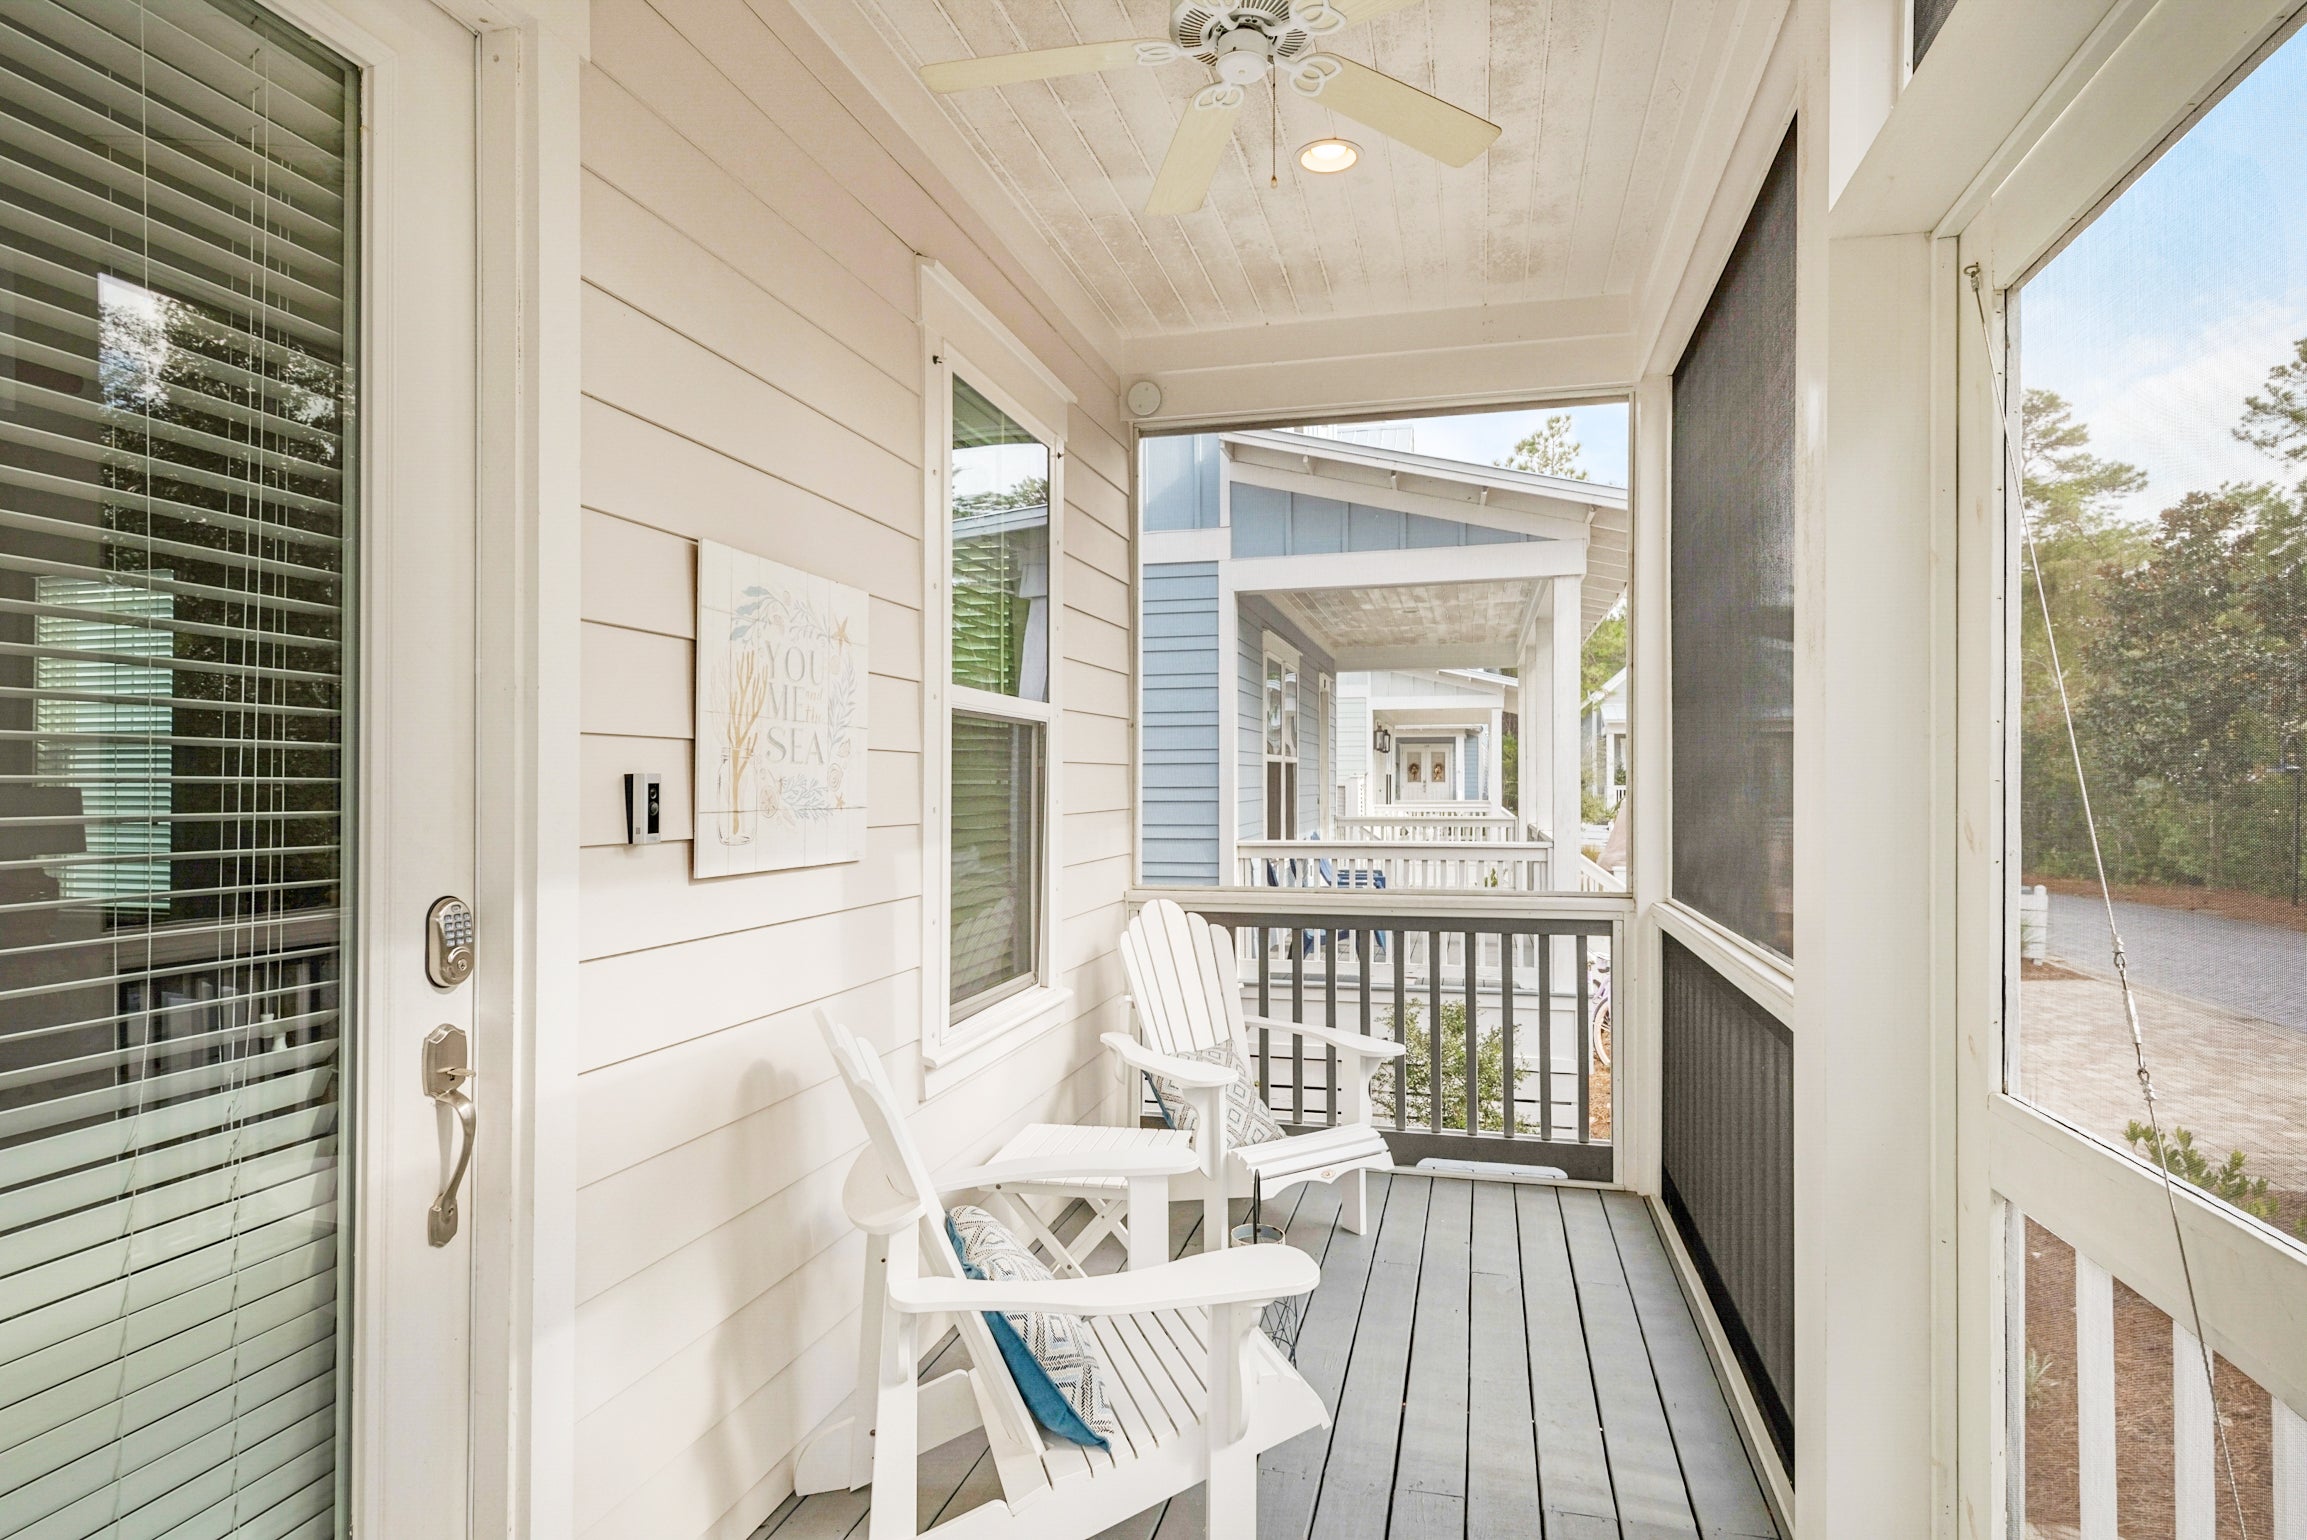 Enjoy a relaxing front porch